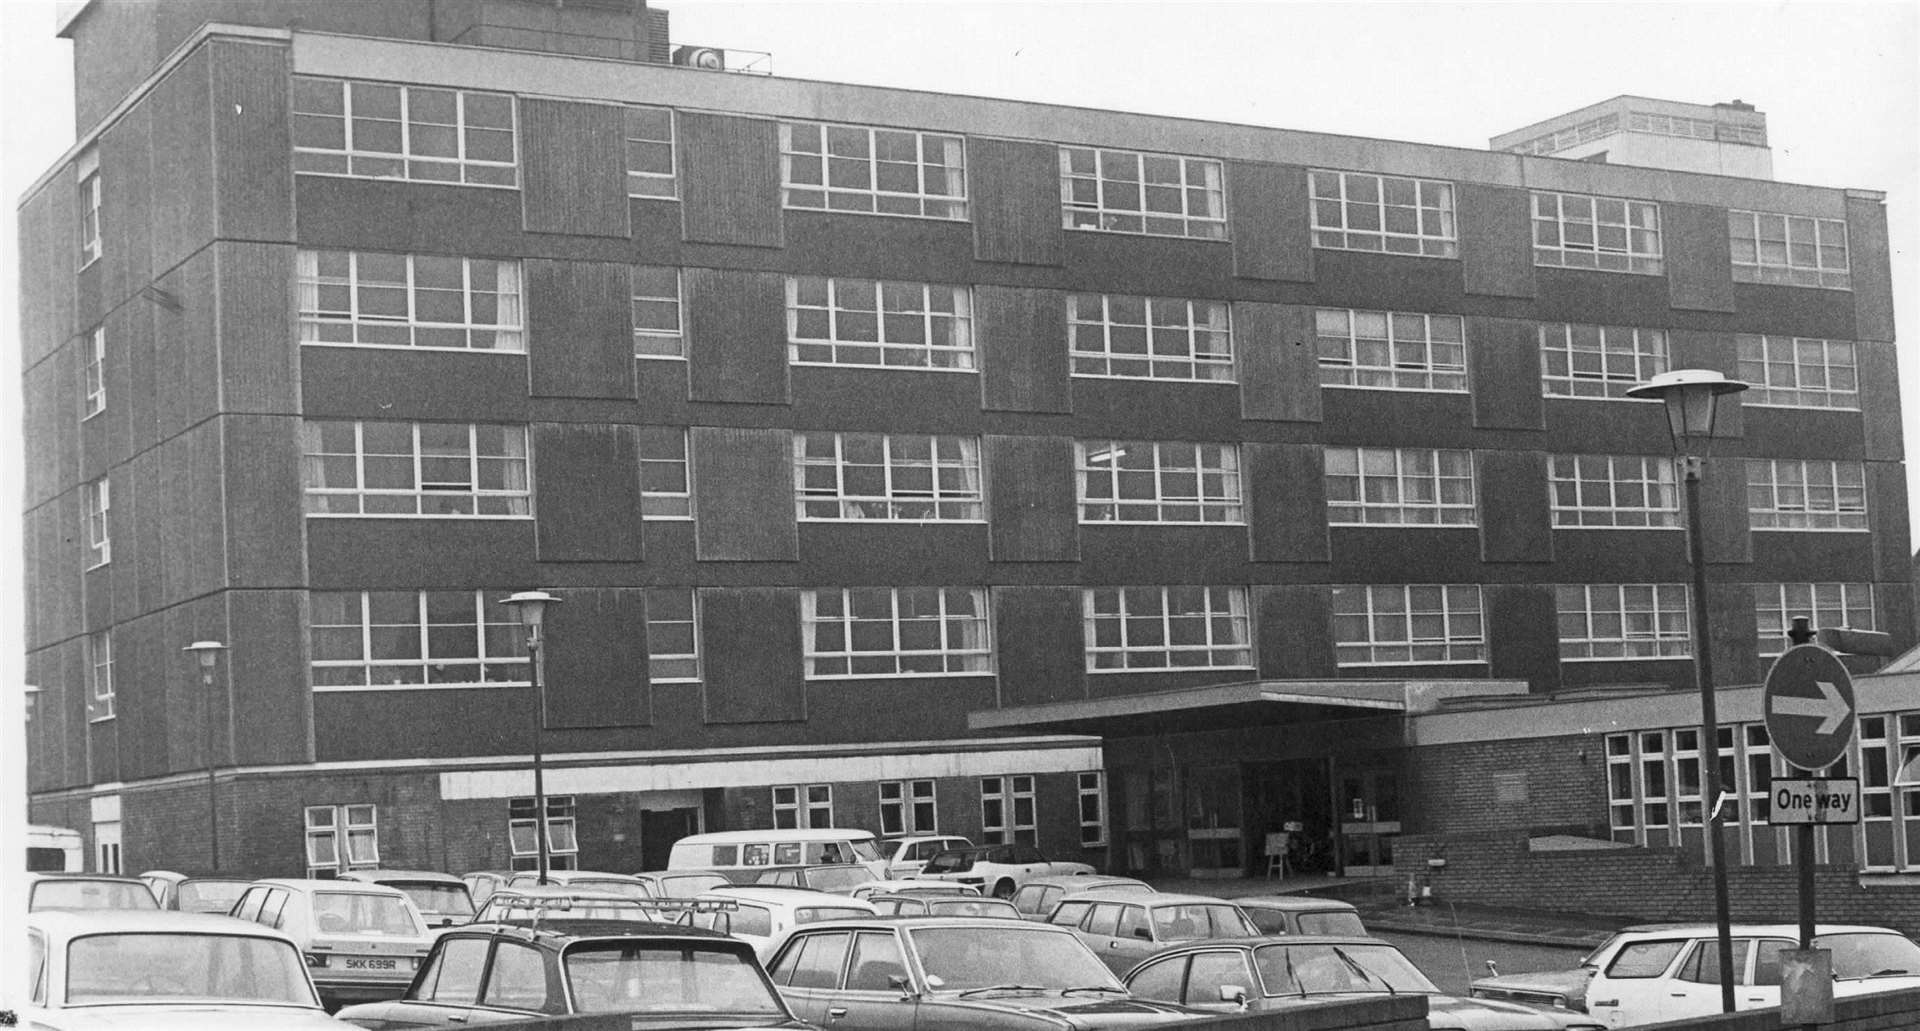 Gravesend Hospital in 1980